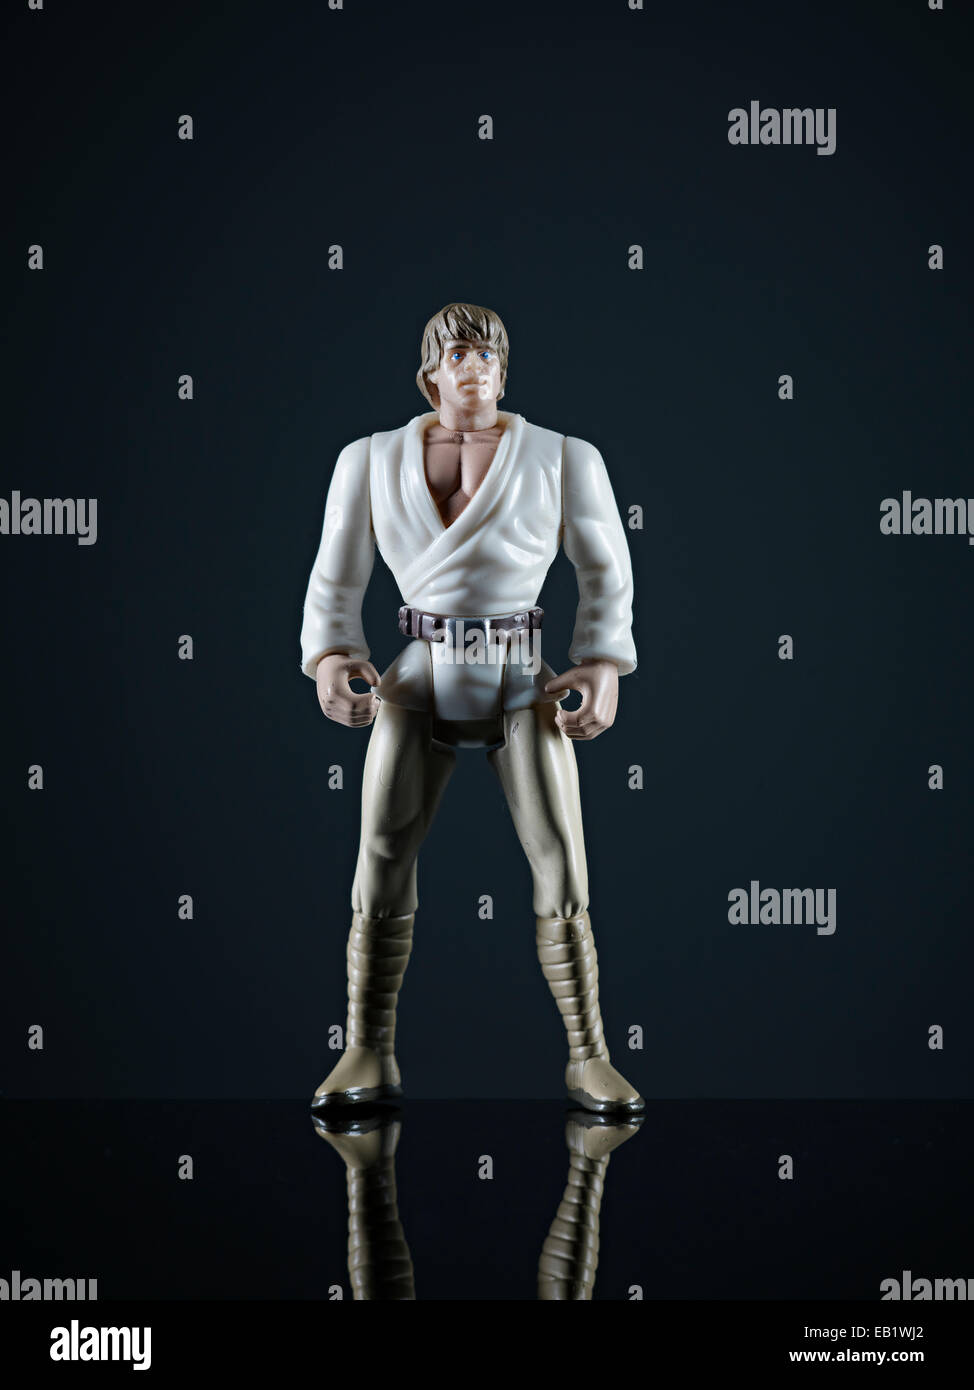 Luke Skywalker star wars studio portrait photograph of action figure Stock Photo